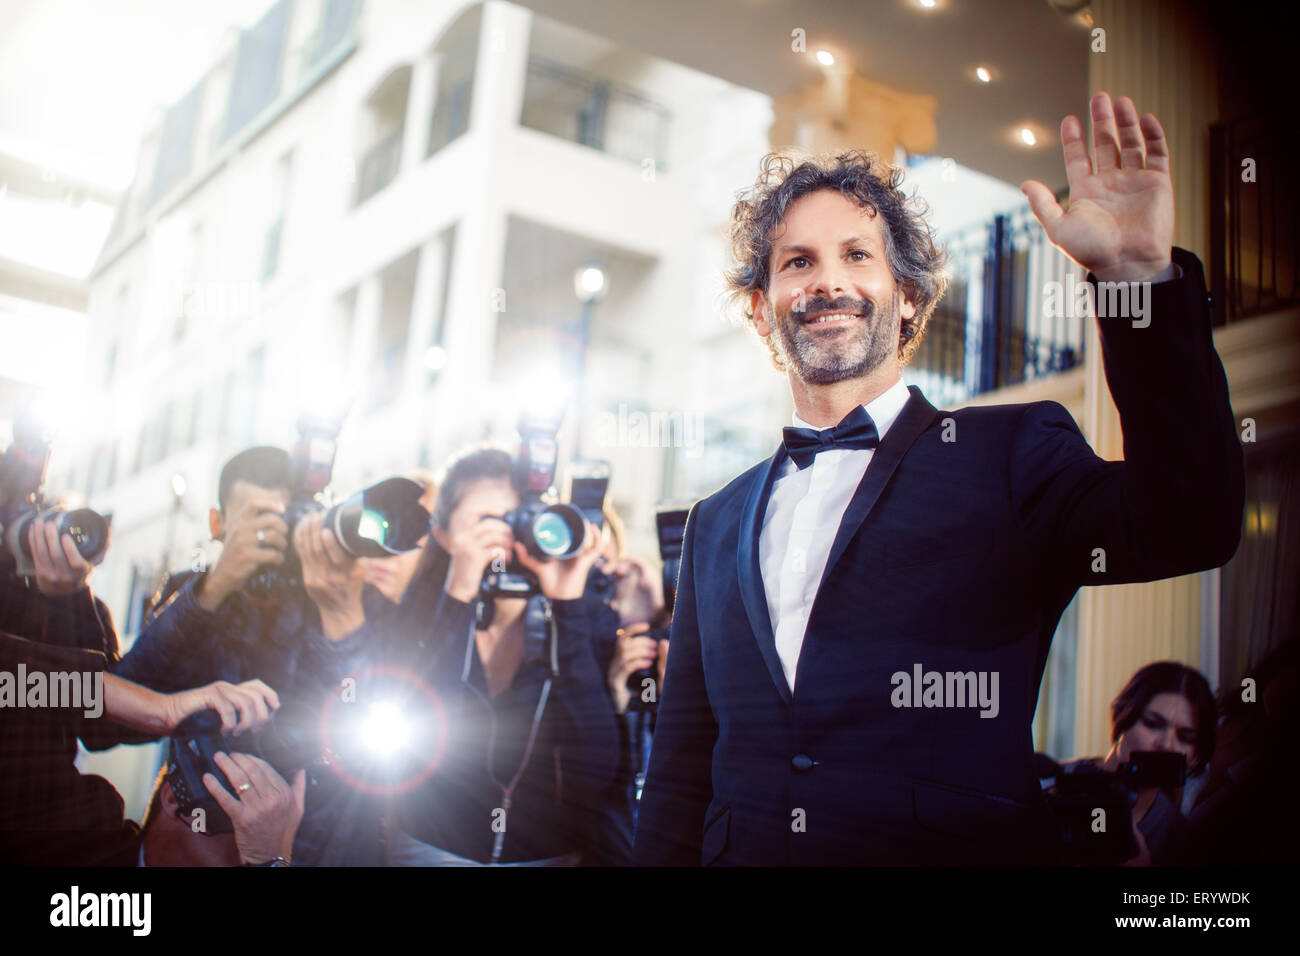 Celebrity waving to paparazzi photographers at event Stock Photo